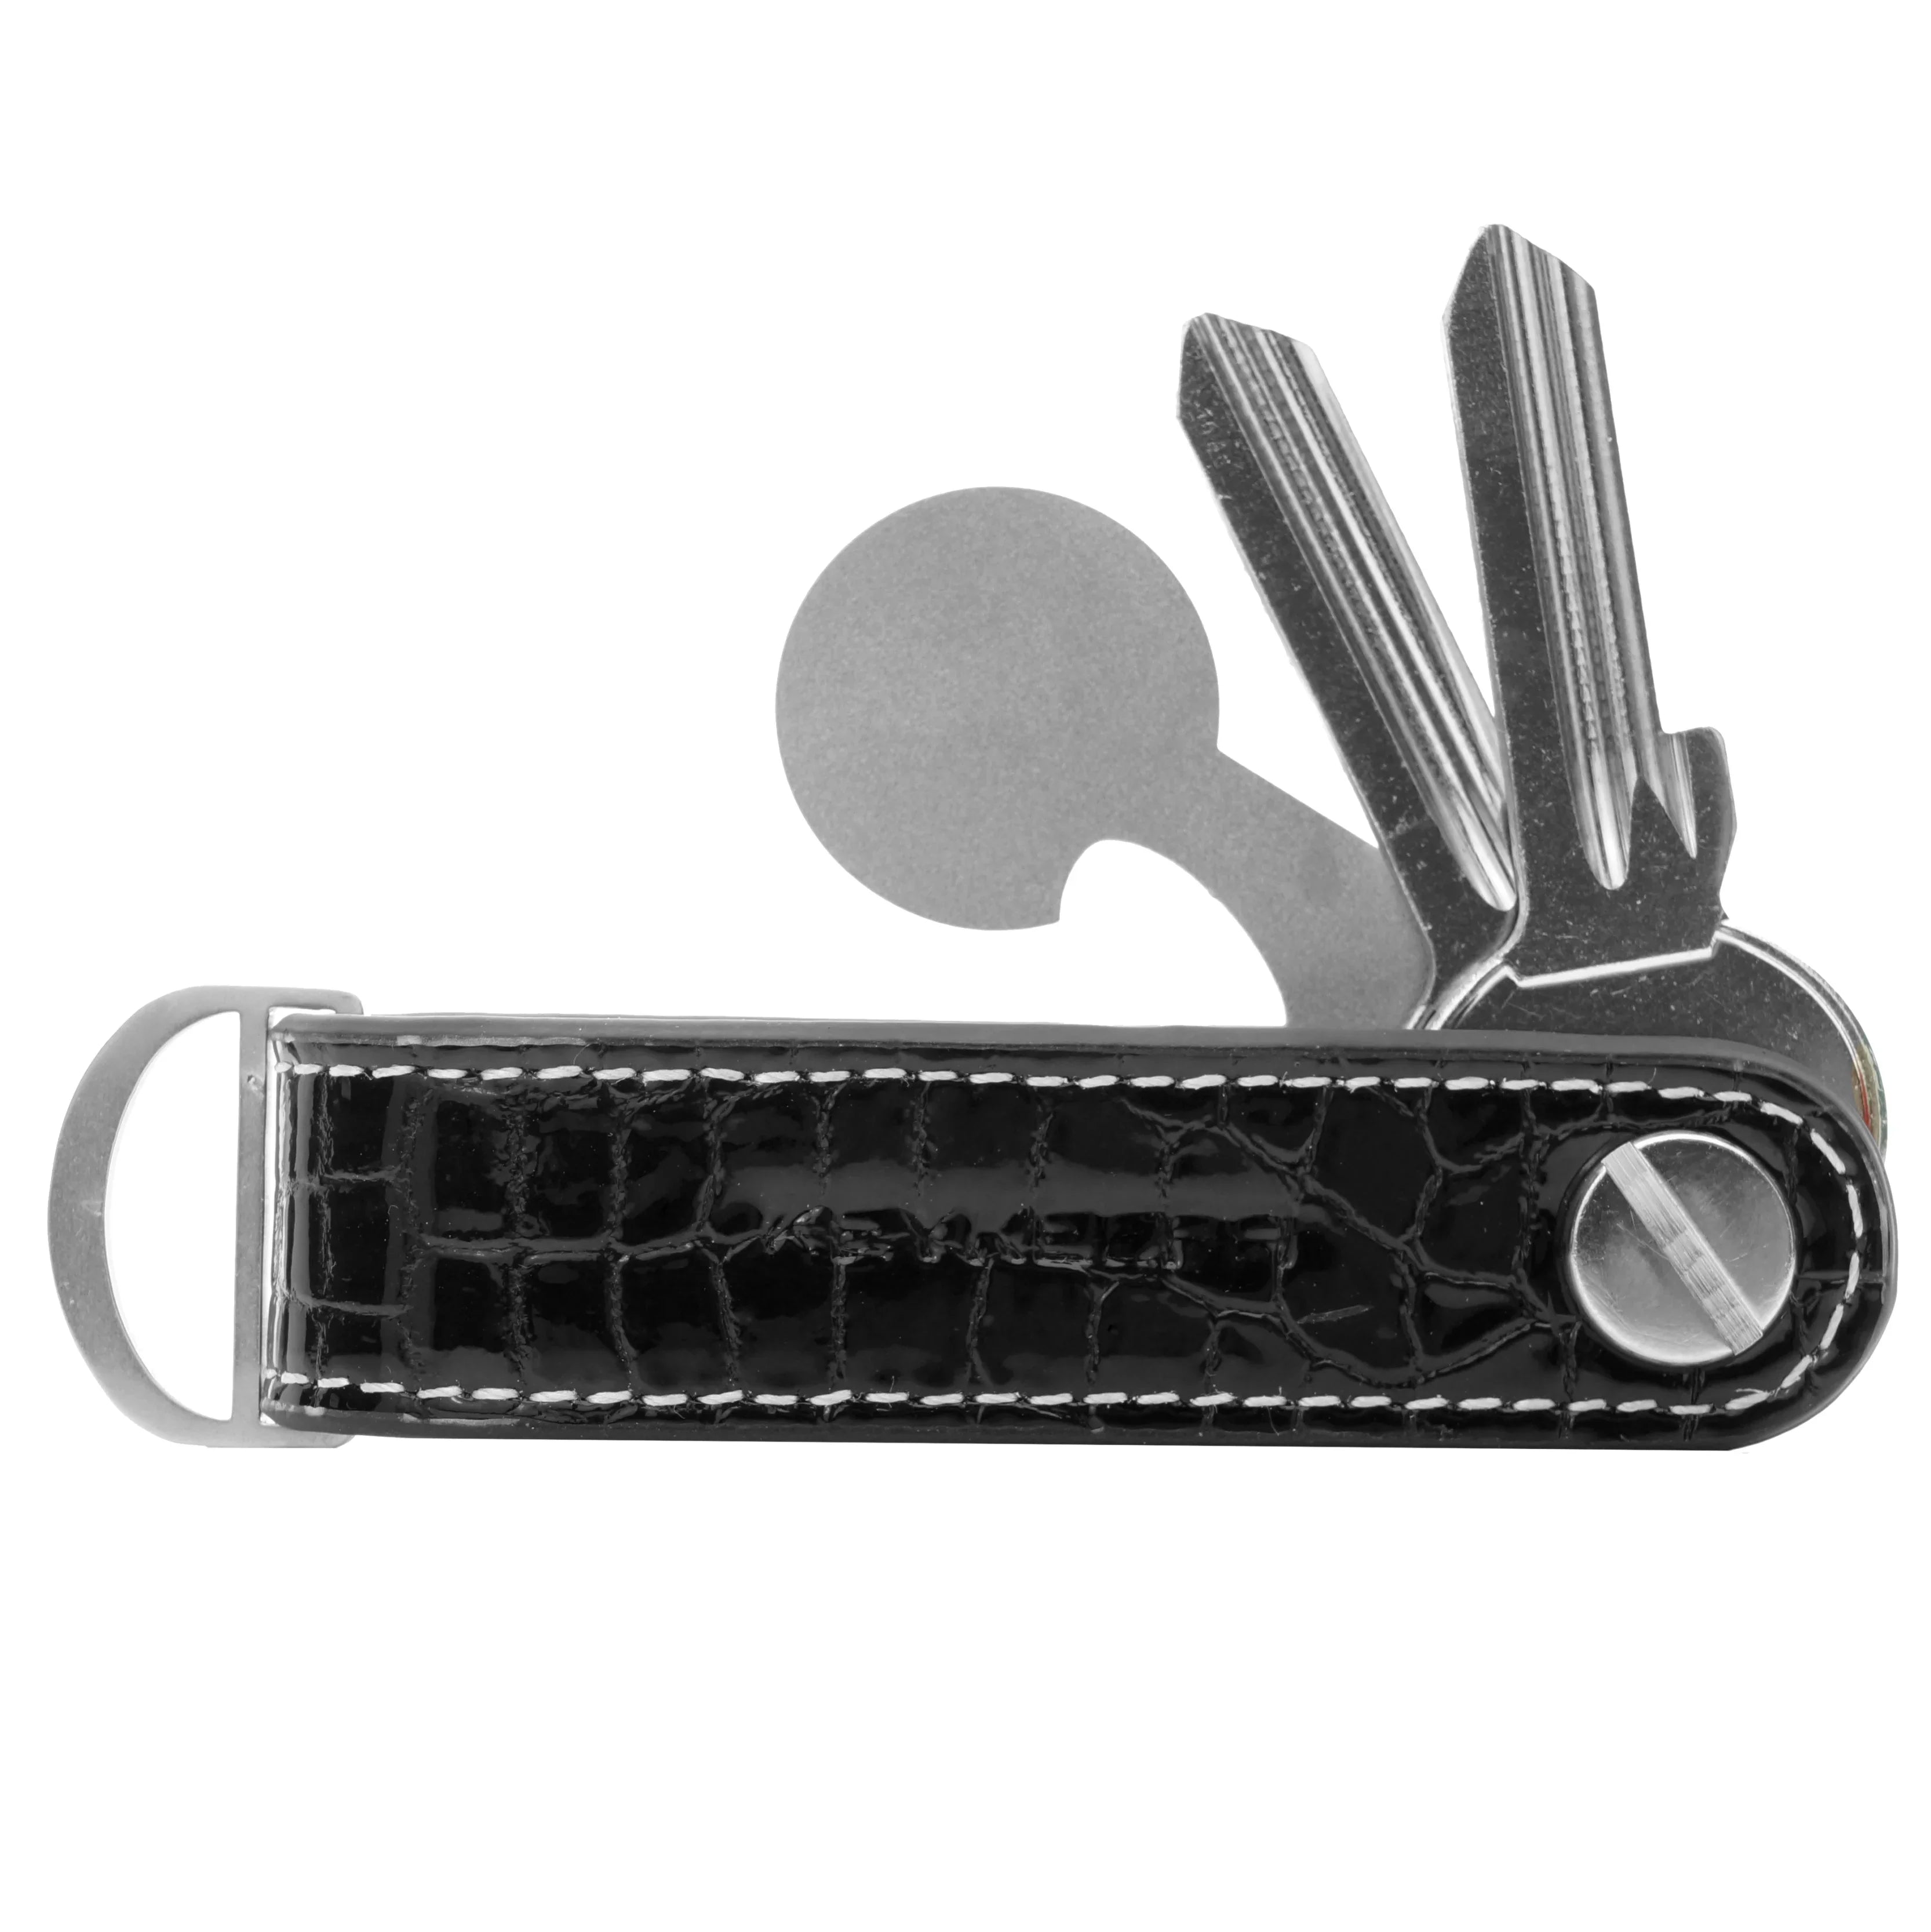 Keykeepa Loop Exklusiv Schlüssel Organizer - cayman black